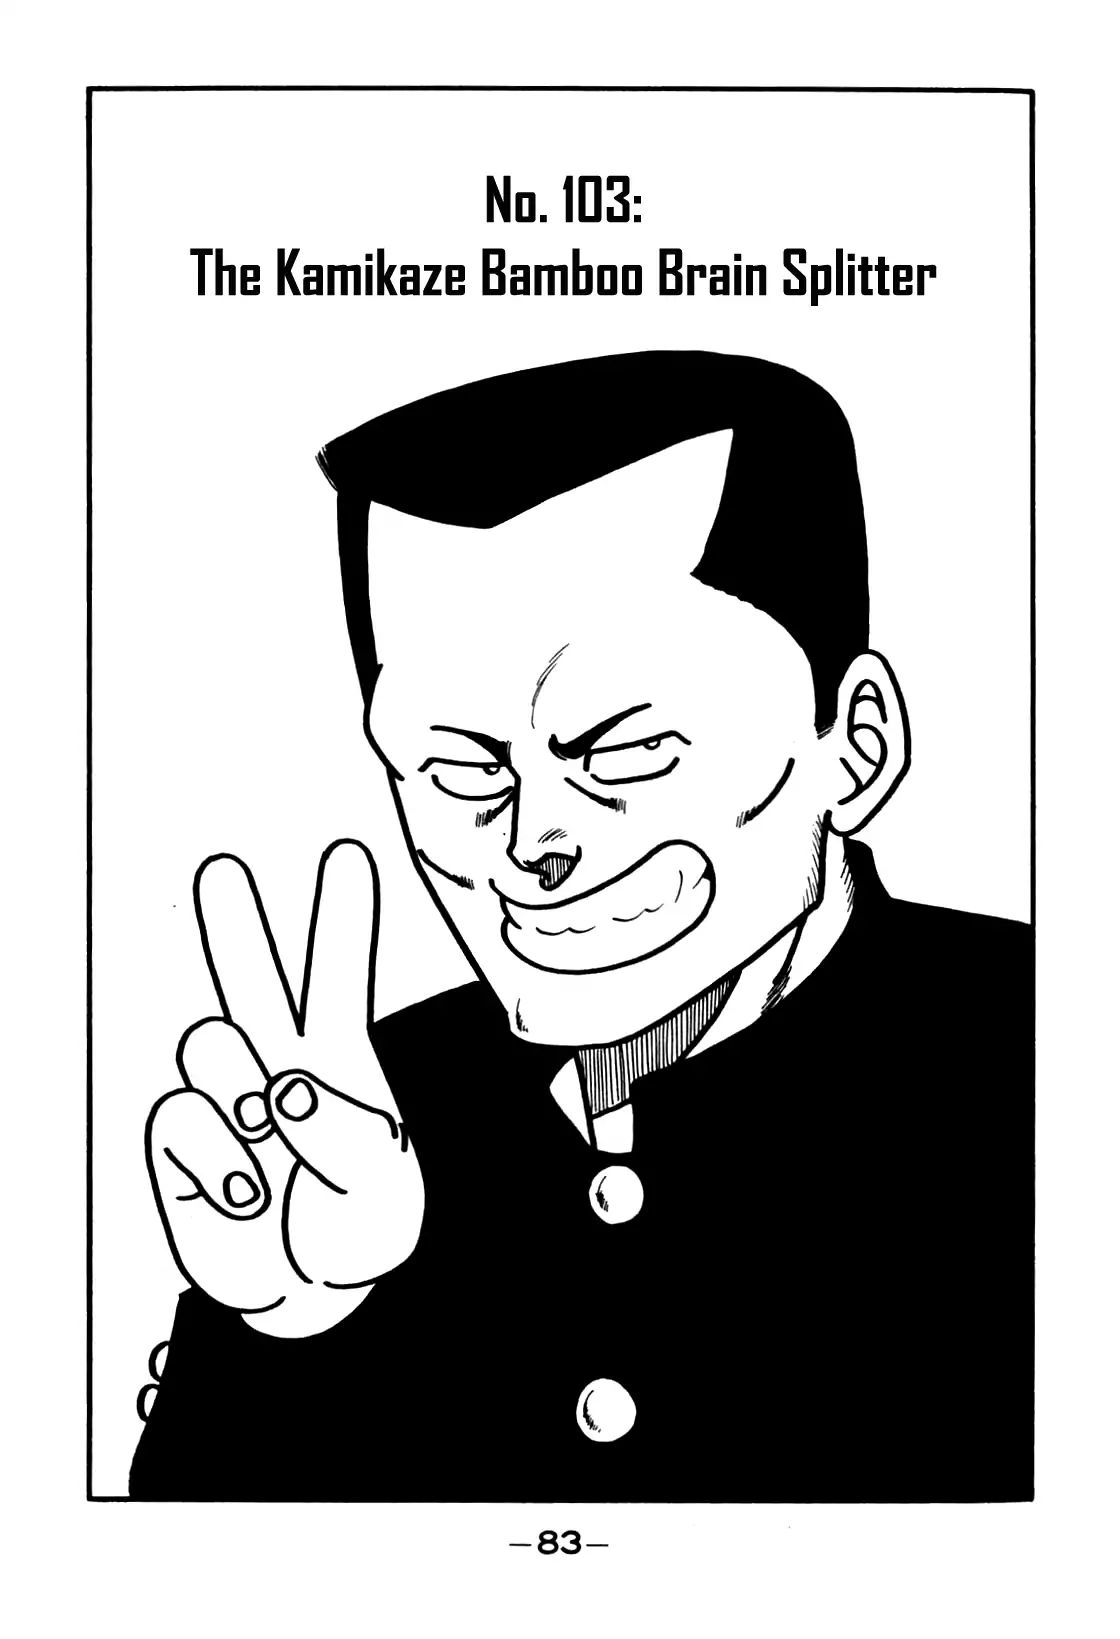 Be-Bop-Highschool Vol.12 Chapter 103: The Kamikaze Bamboo Brain Splitter